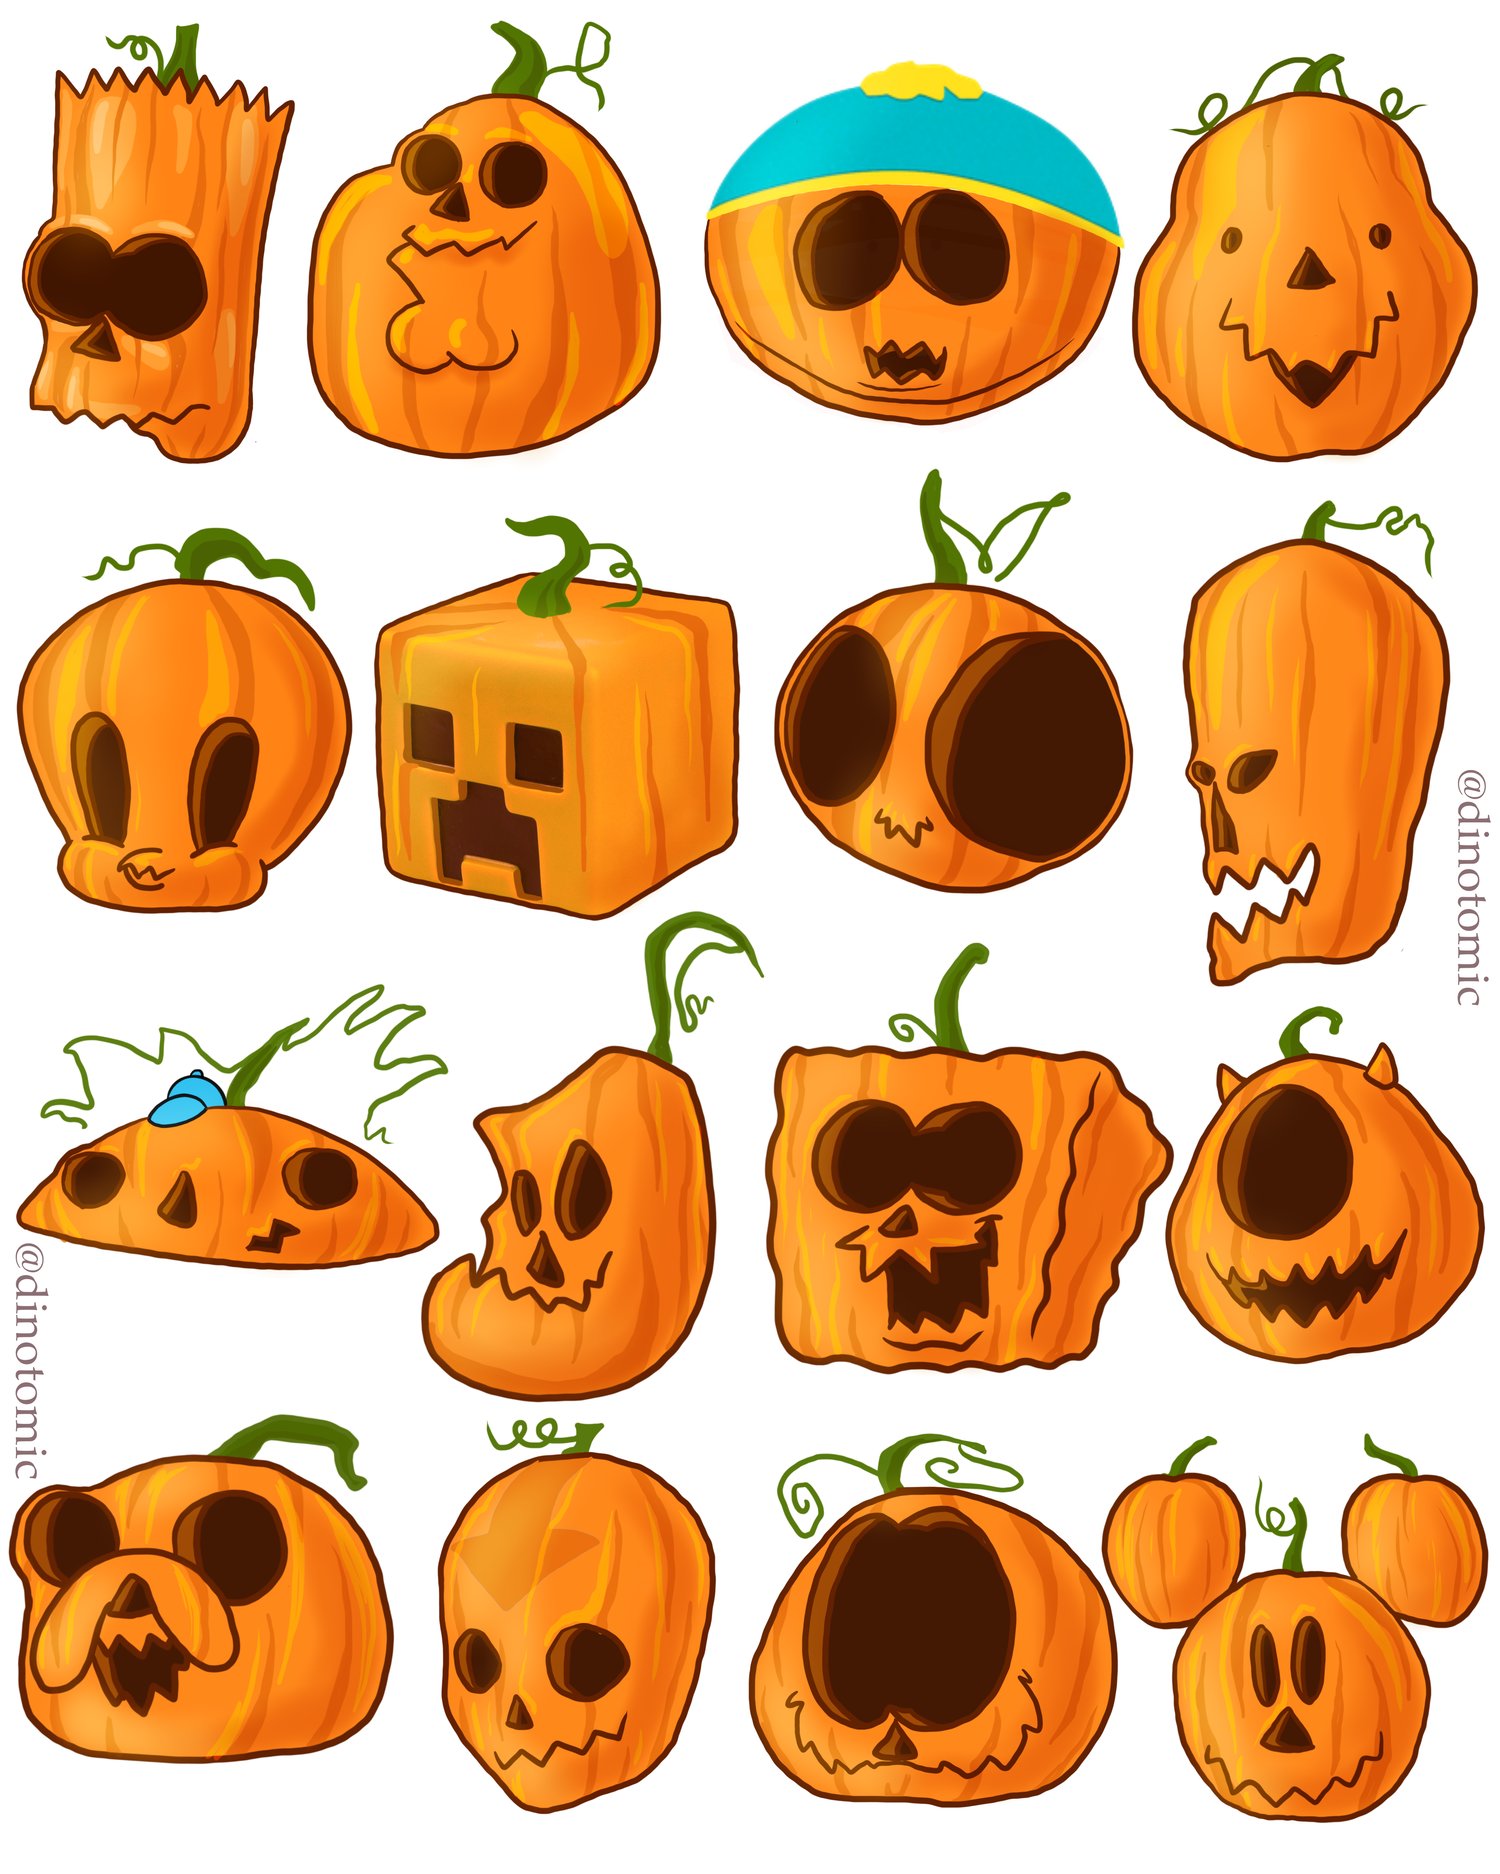 282 Pumpkin characters print